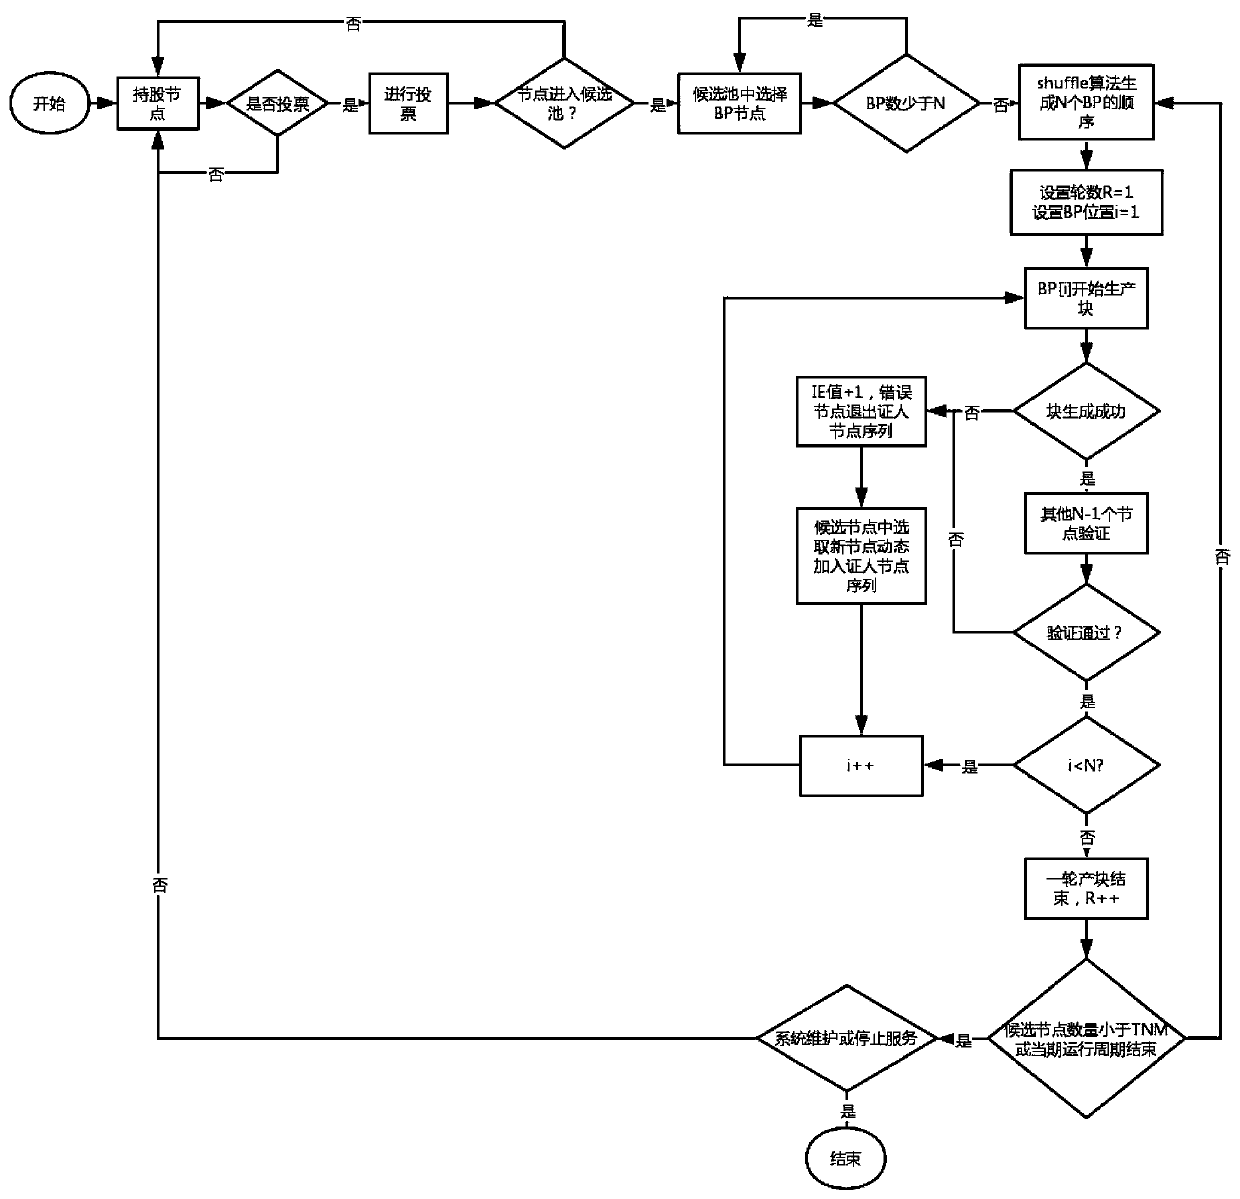 Block chain dynamic DPoS consensus method based on reputation mechanism and DPBFT algorithm